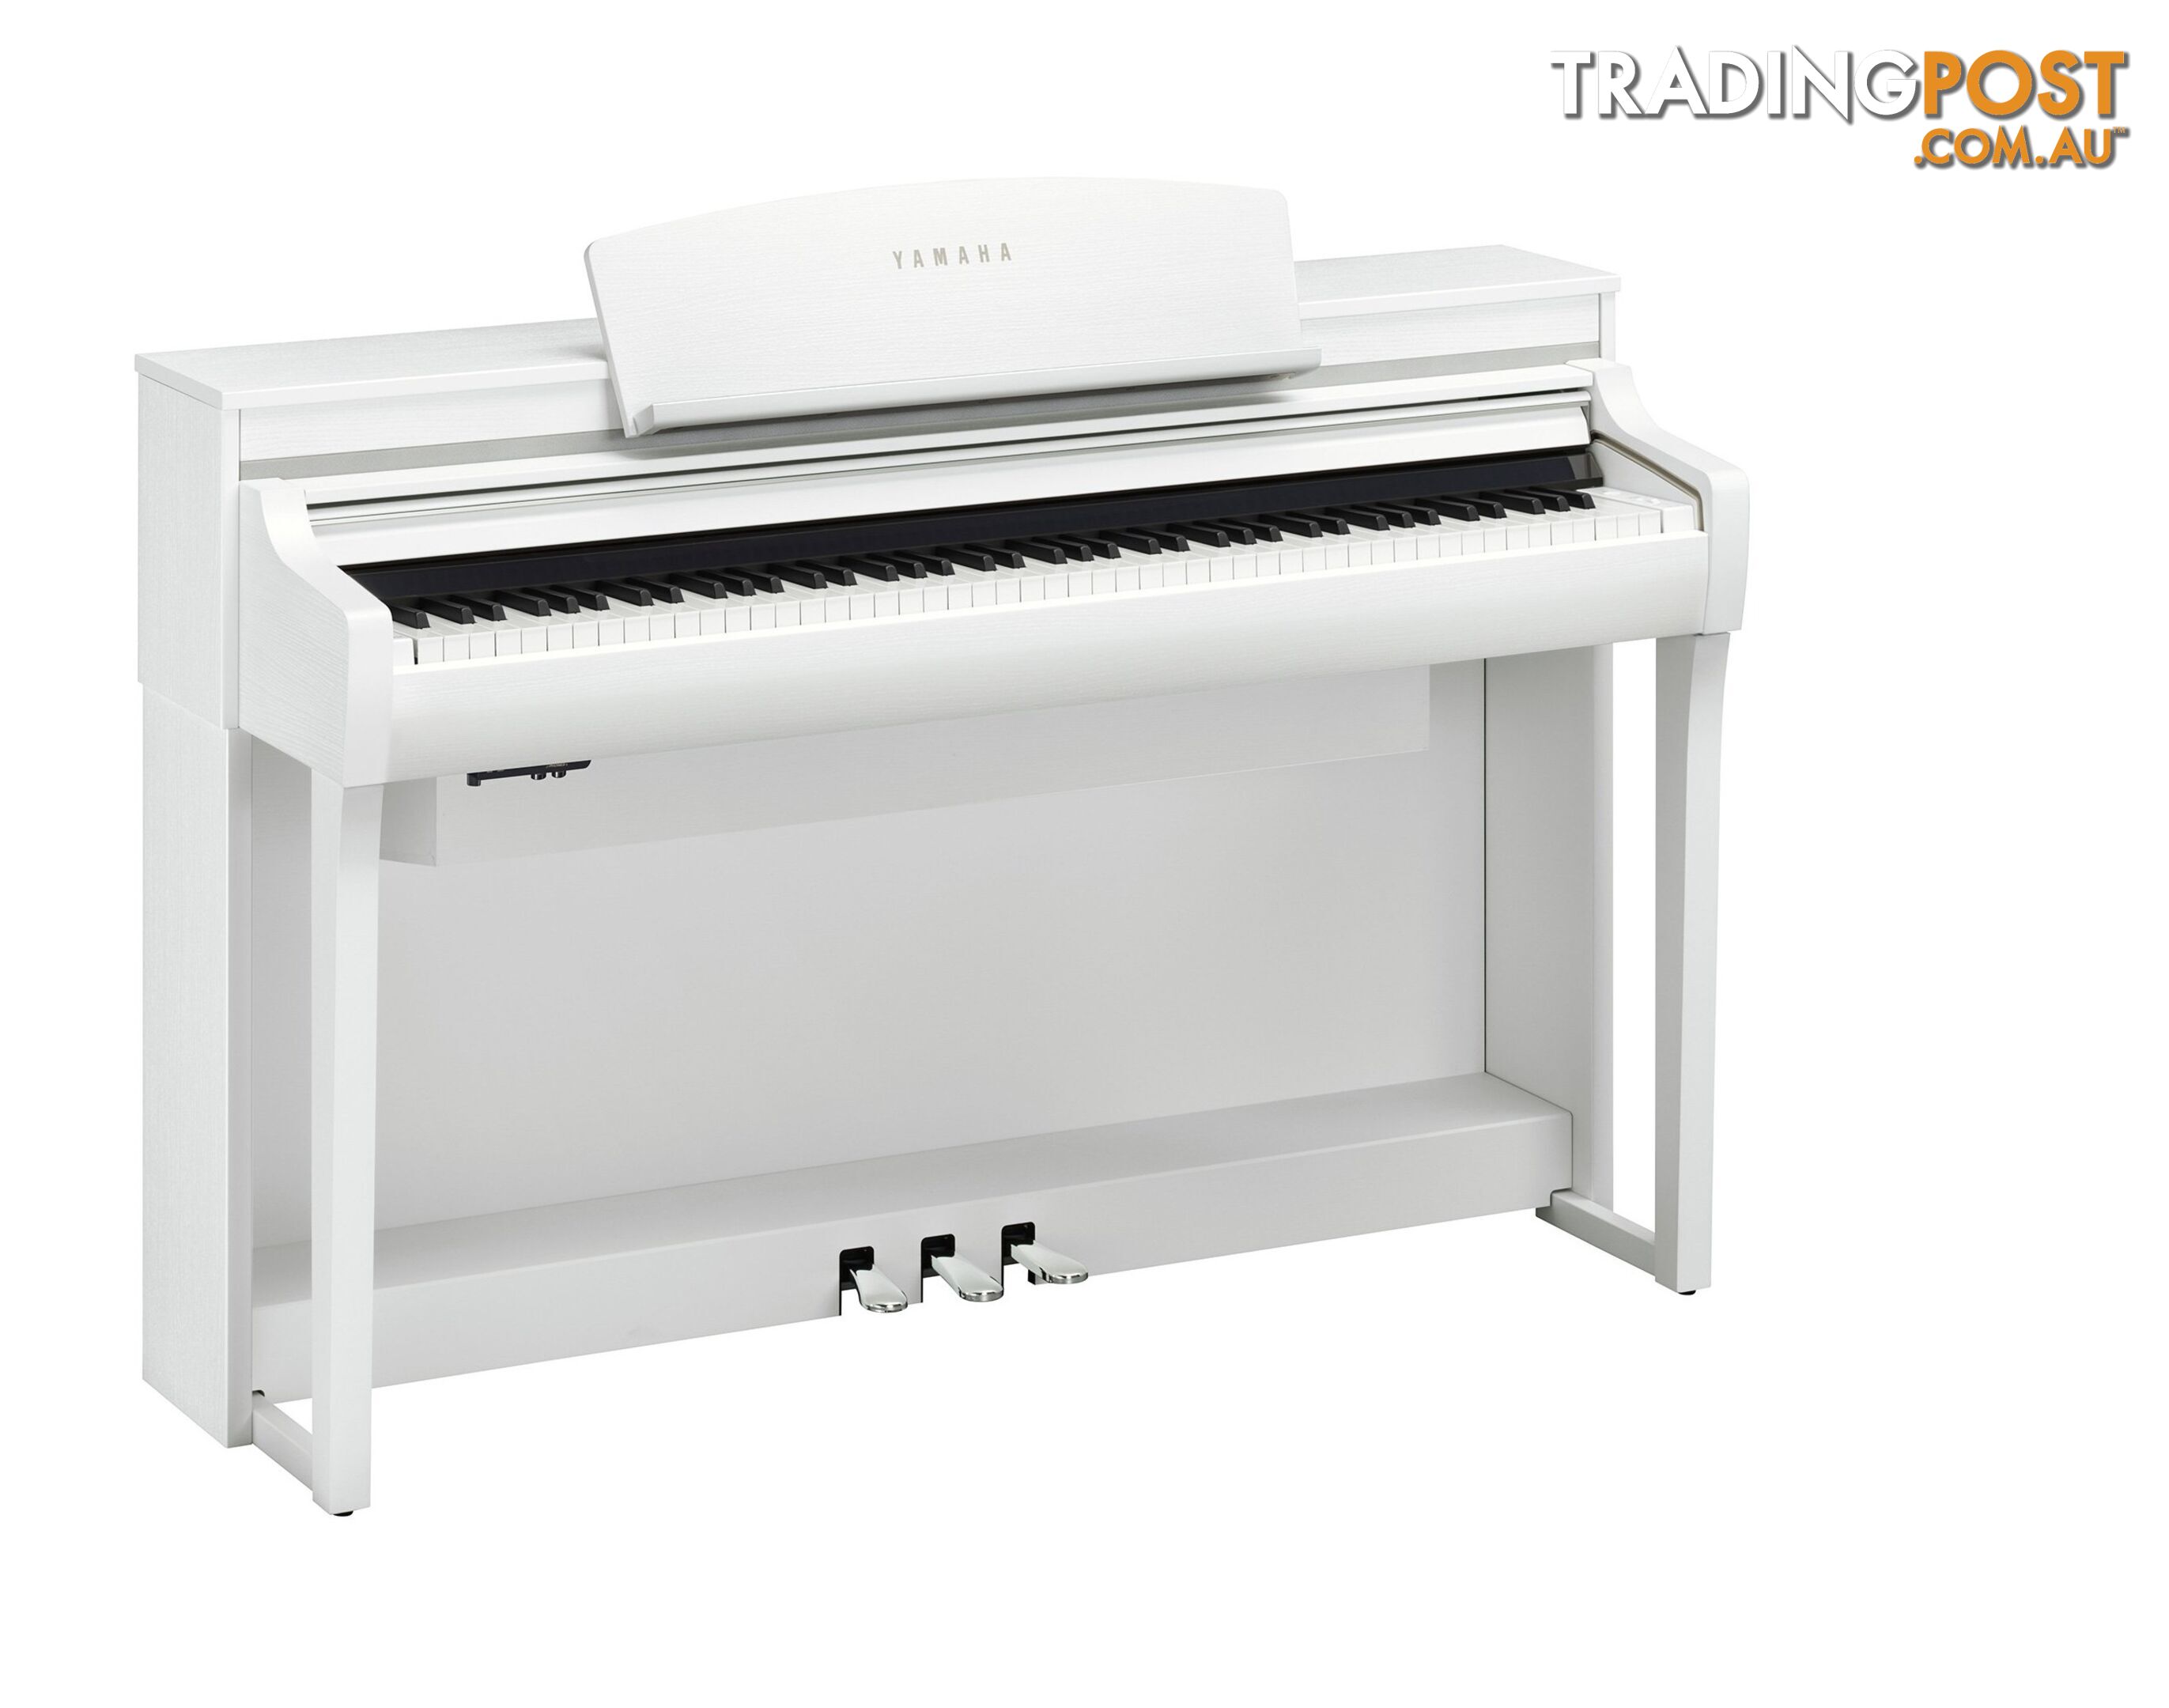 Yamaha Clavinova CSP-275 Digital Piano, Black or White